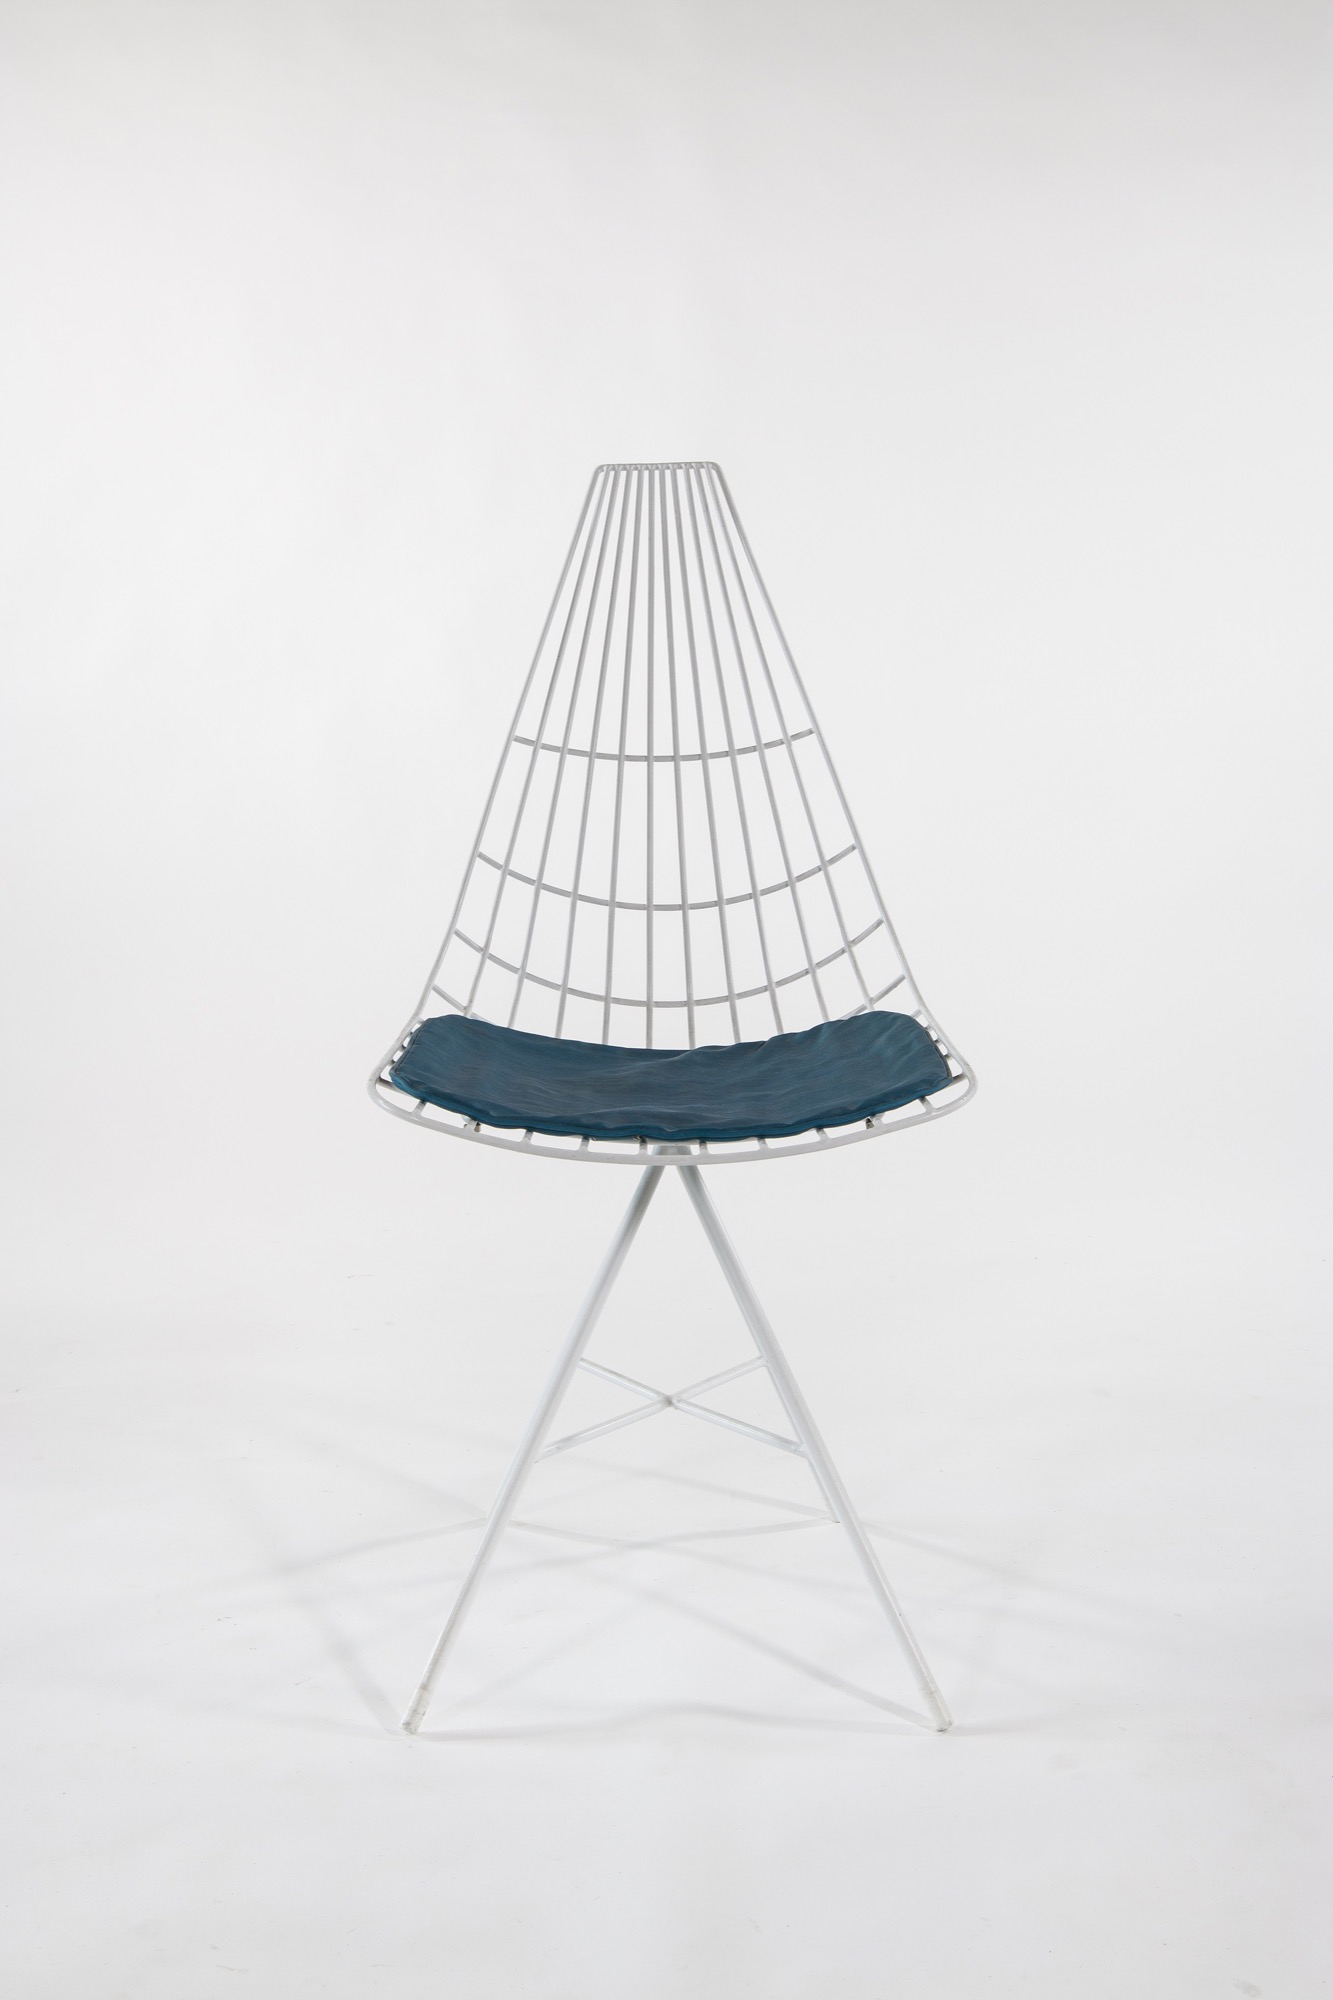 Clement Meadmore, <em>DC601A chair</em>, 1957, plastic coated steel, vinyl, rubber. Harris/Atkins Collection.